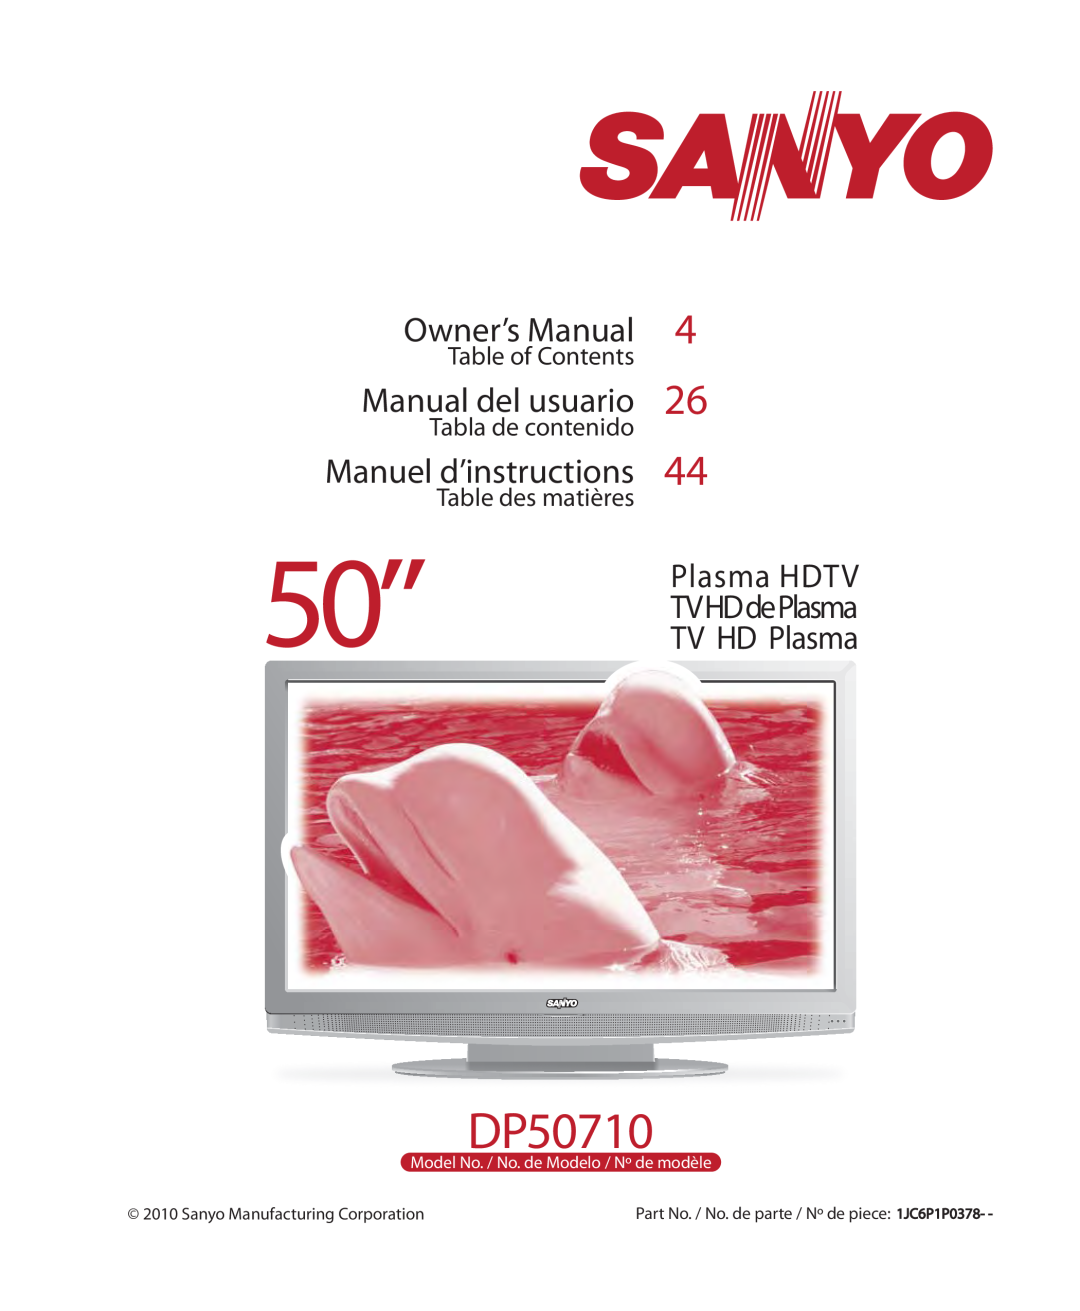 Sanyo DP50710 owner manual Owner’s Manual, Manual del usuario, Manuel d’instructions, Plasma HDTV, TV HD Plasma 